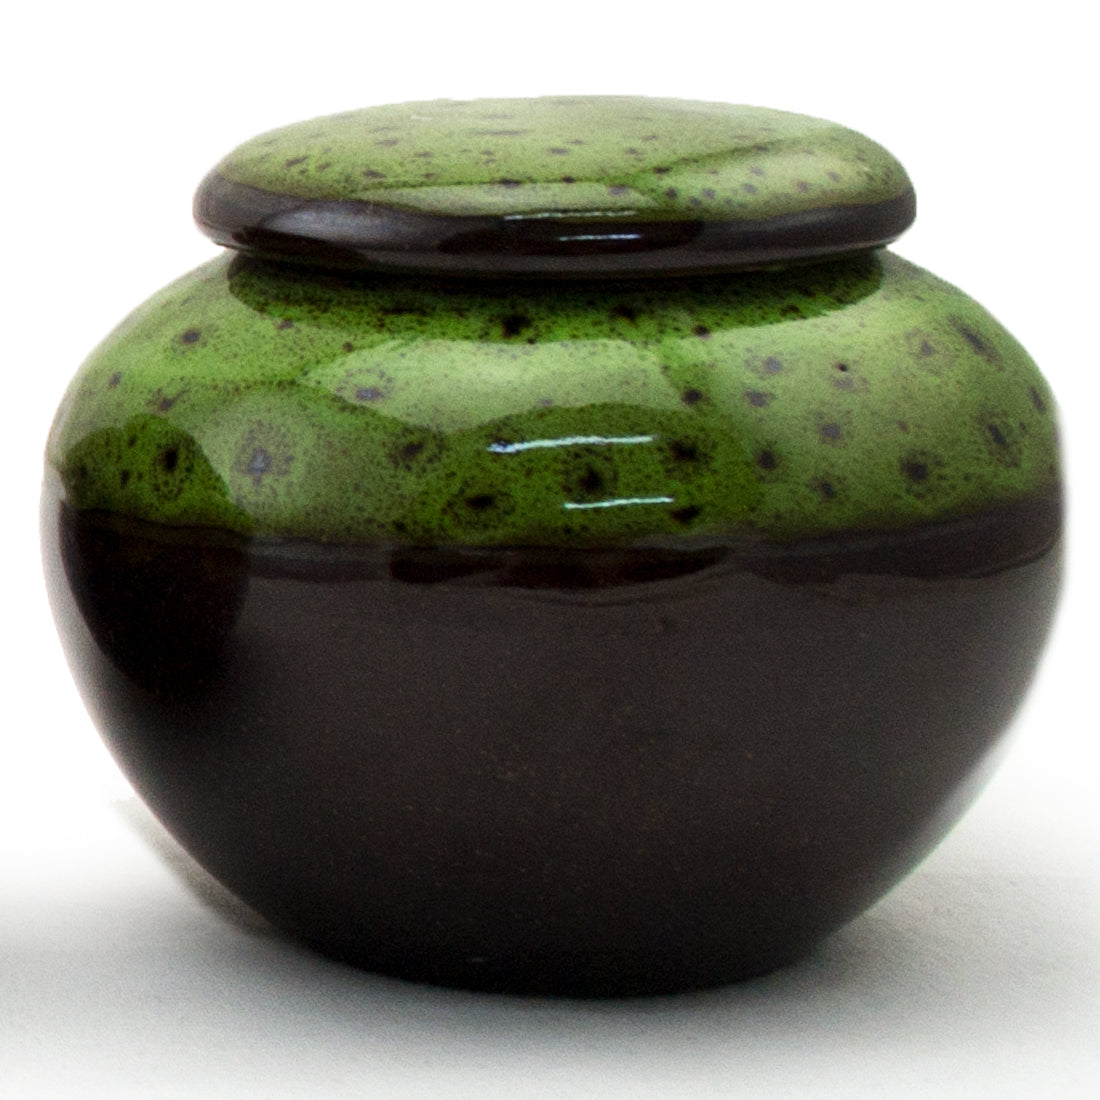 Tea Canister - Ceramic - Green - Original Source